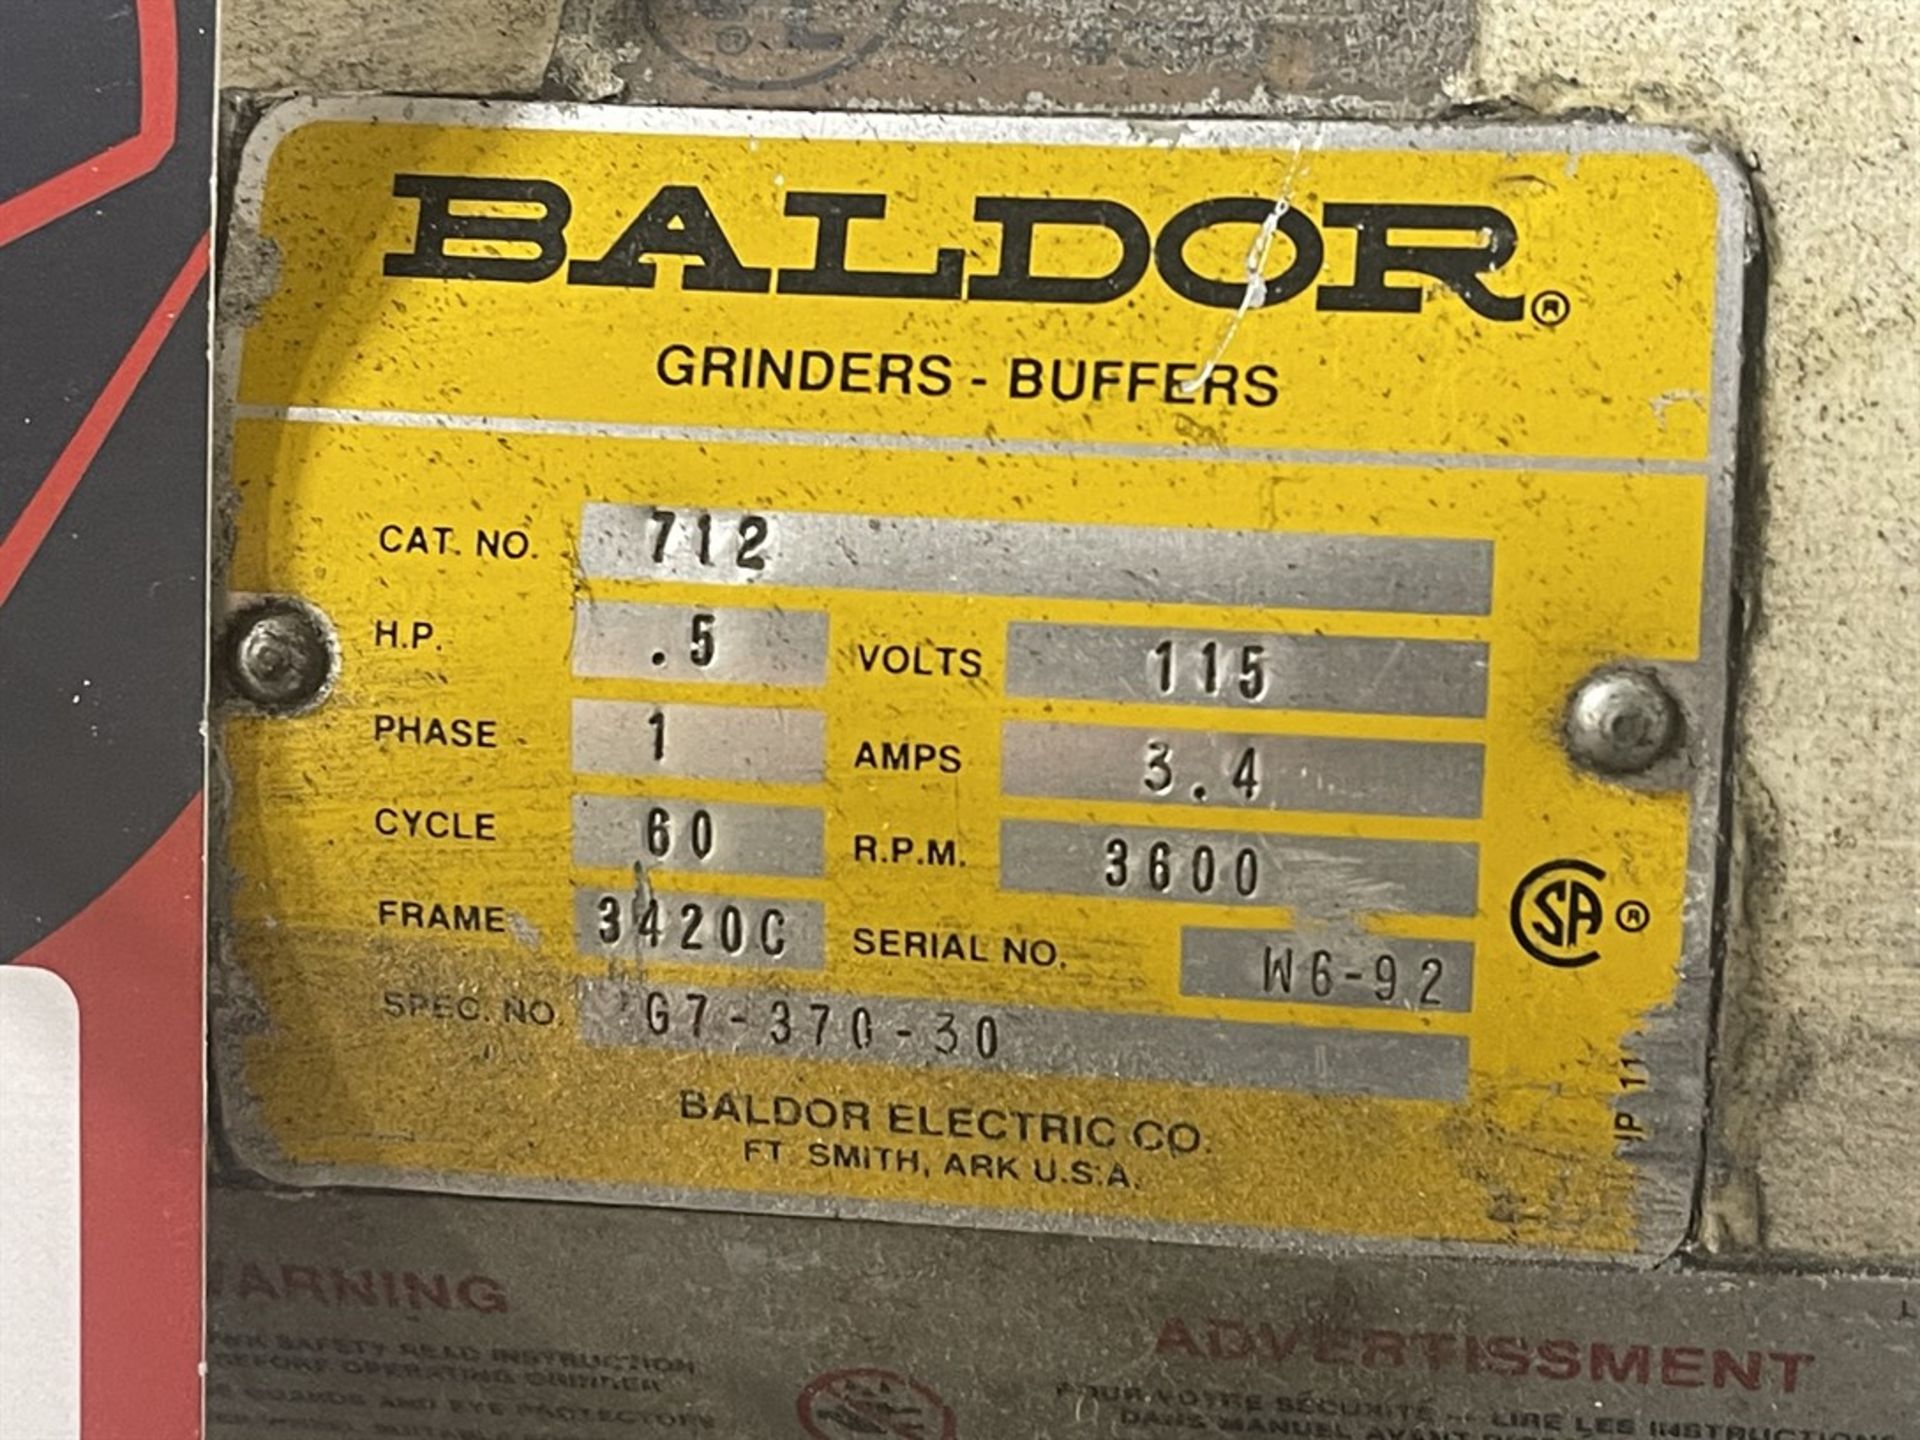 BALDOR 712 Pedestal Grinder, s/n W6-92, 1/2 HP, 3600 RPM - Image 4 of 4